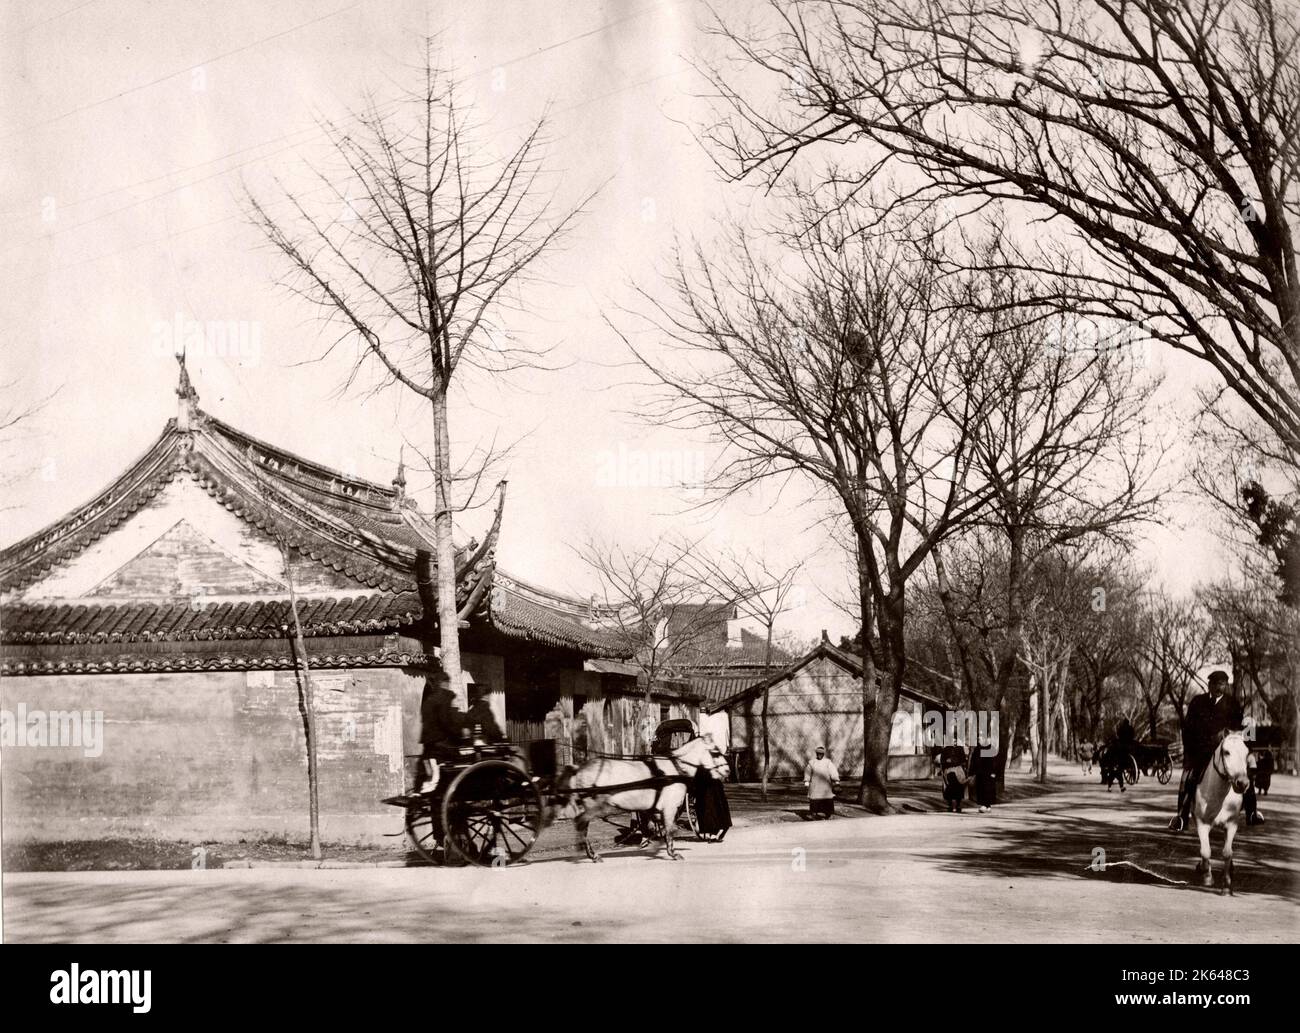 Street corne,r pony and trap likely Shangahi, China Stock Photo